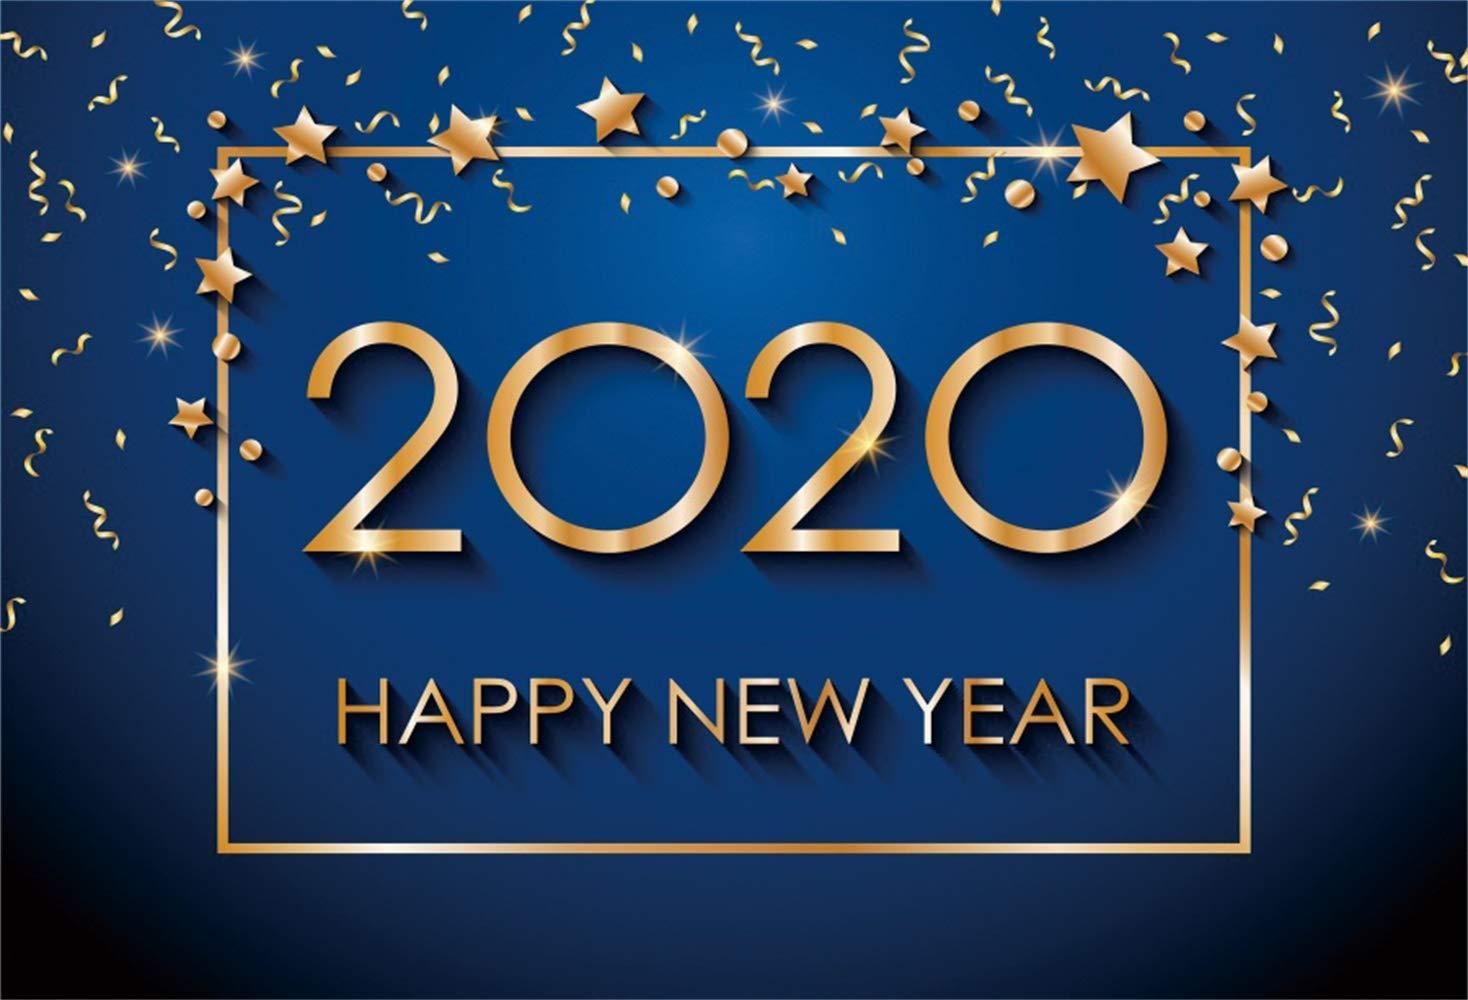 Amazon.com, Leowefowa 5x3ft Happy New Year 2020 Backdrop